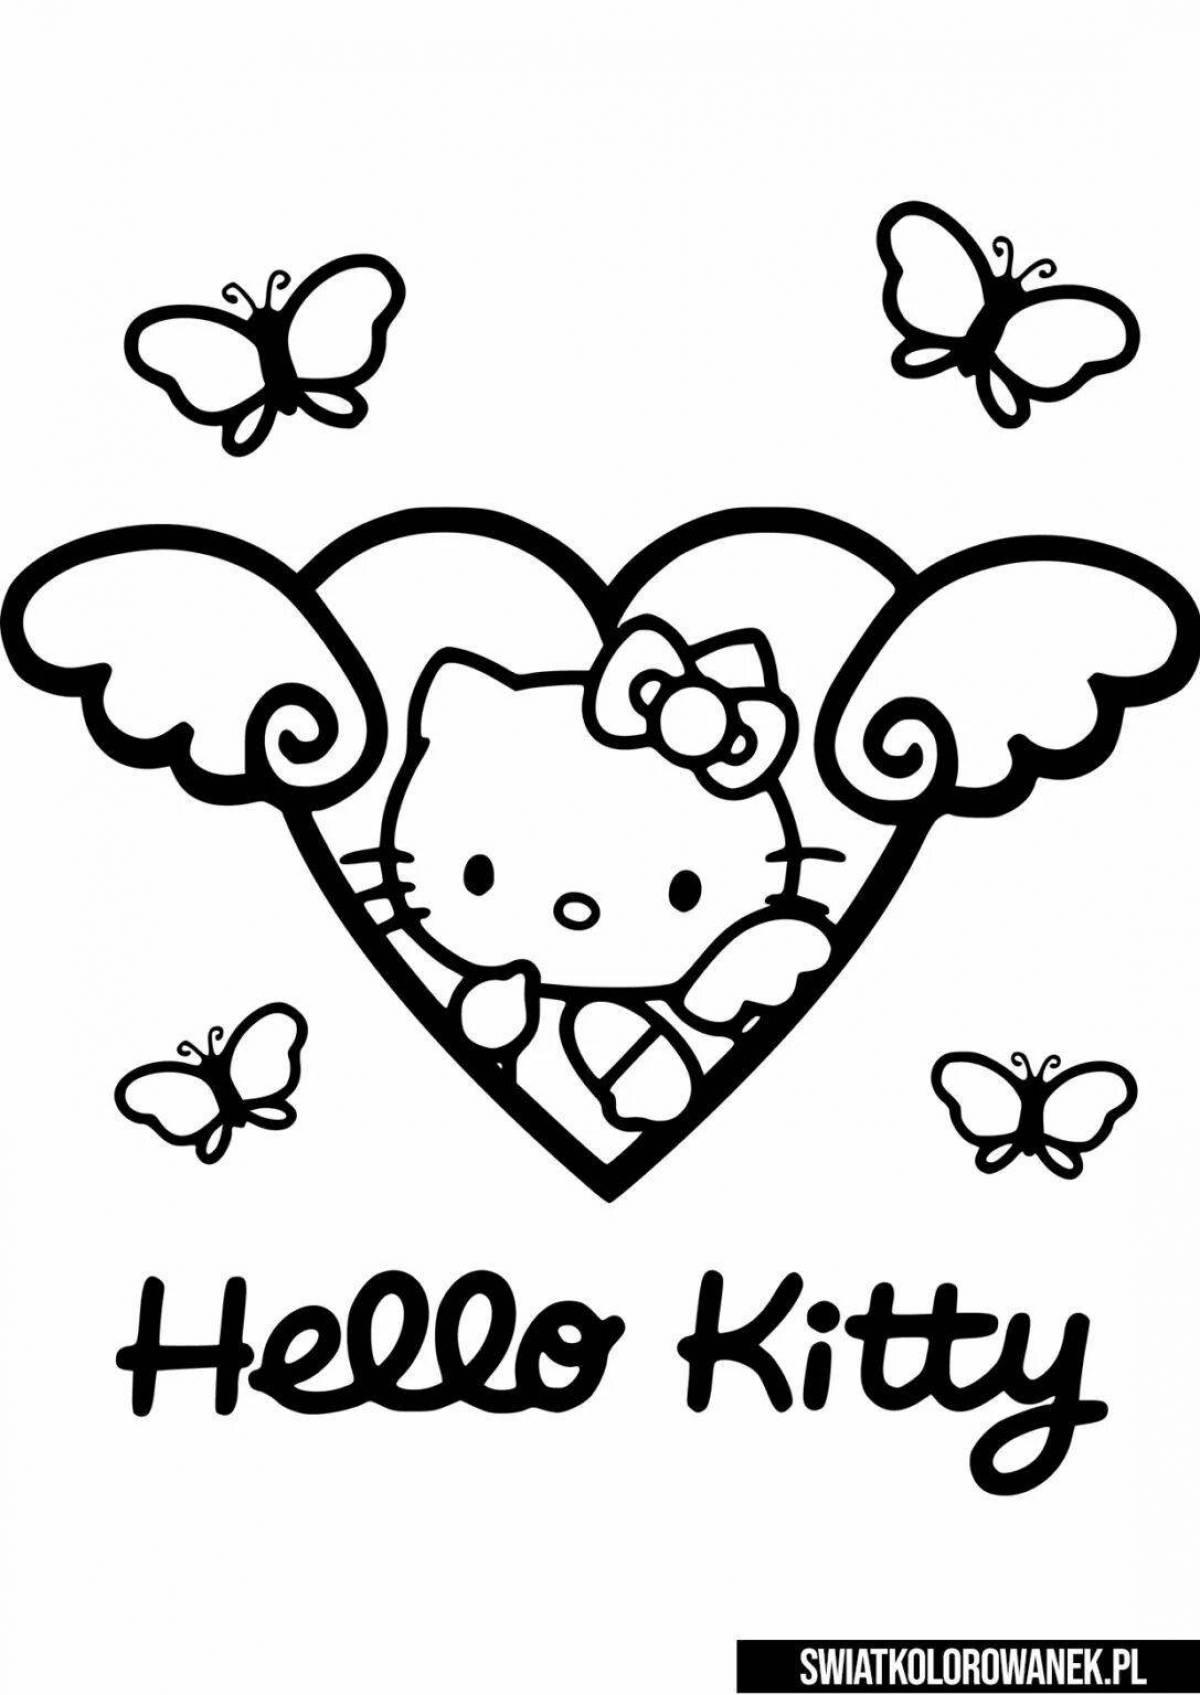 Adorable hello kitty poster